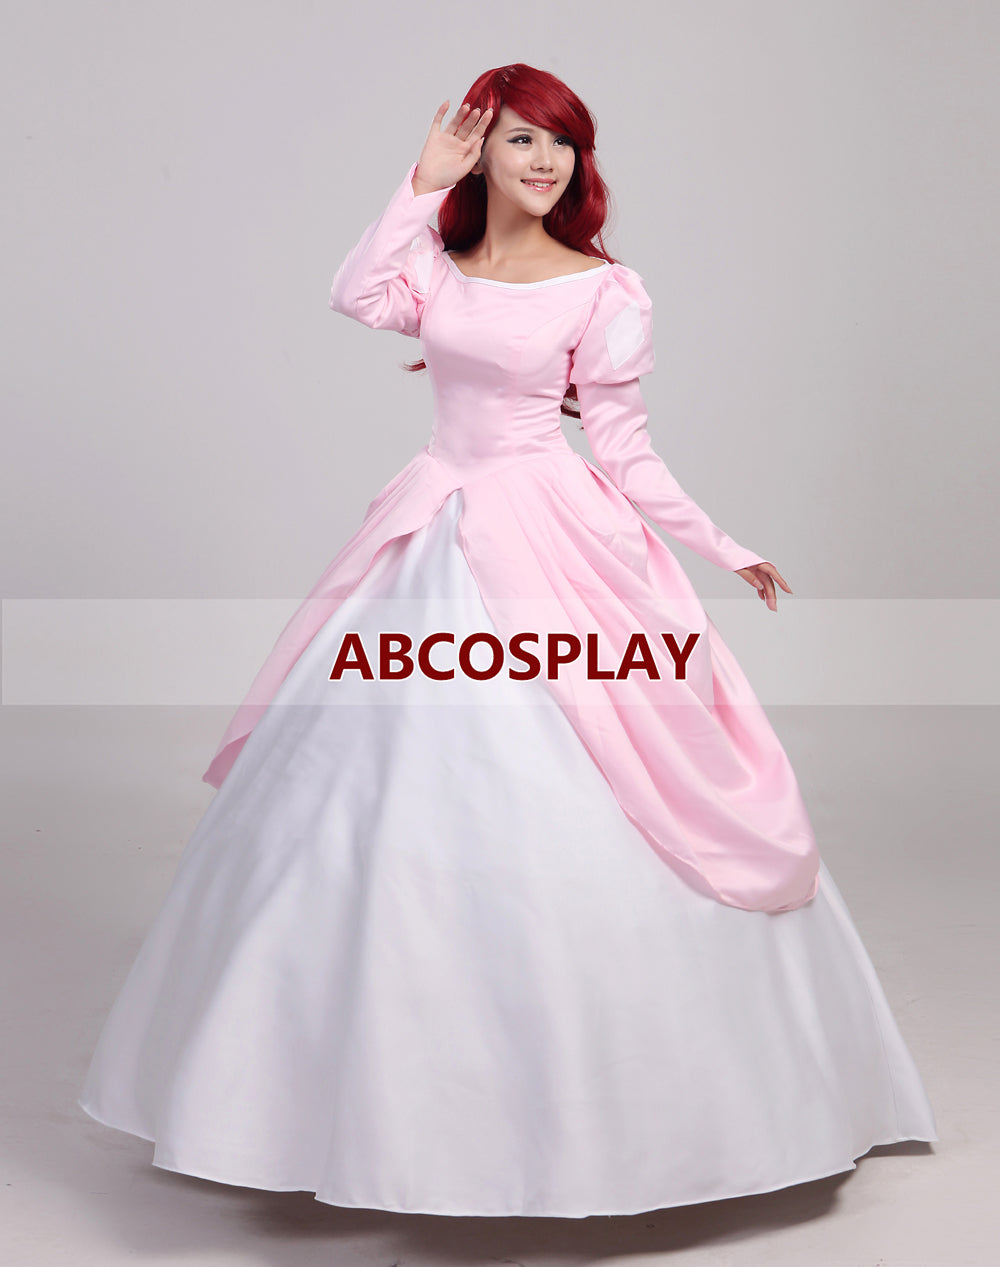 The Little Mermaid Ariel Princess Dress Pink Cosplay Costume